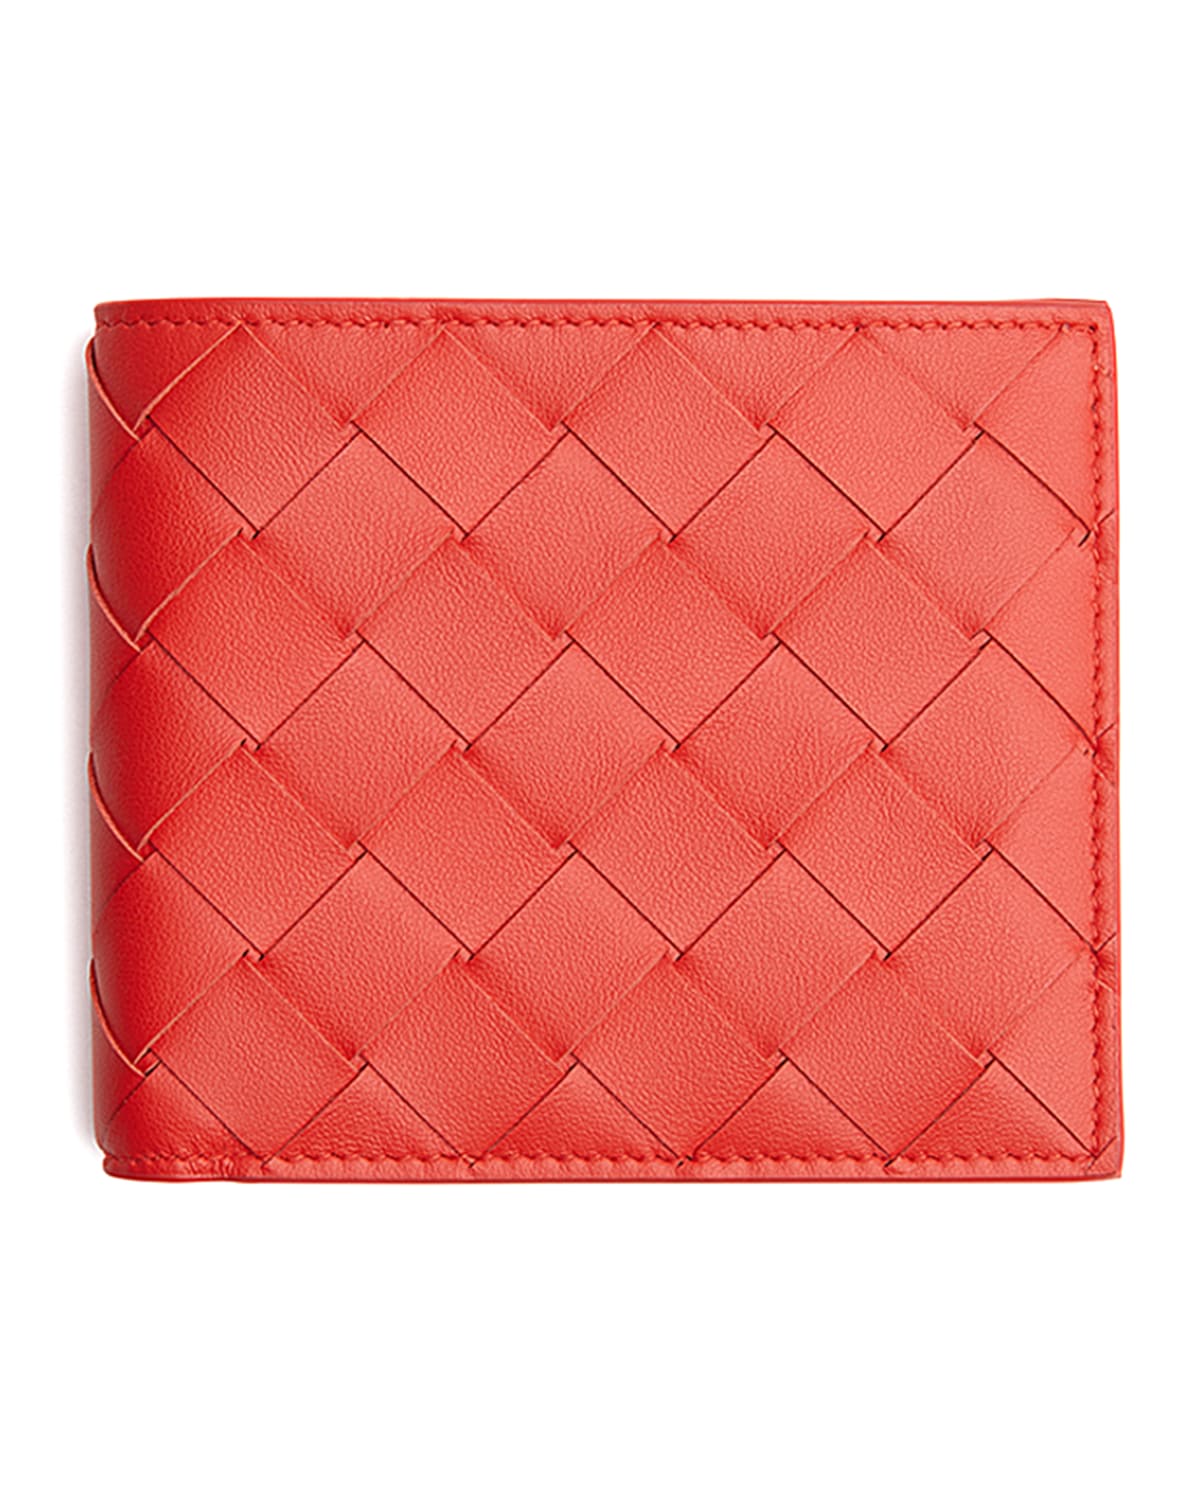 Bottega Veneta Men's Intrecciato Leather Bifold Wallet